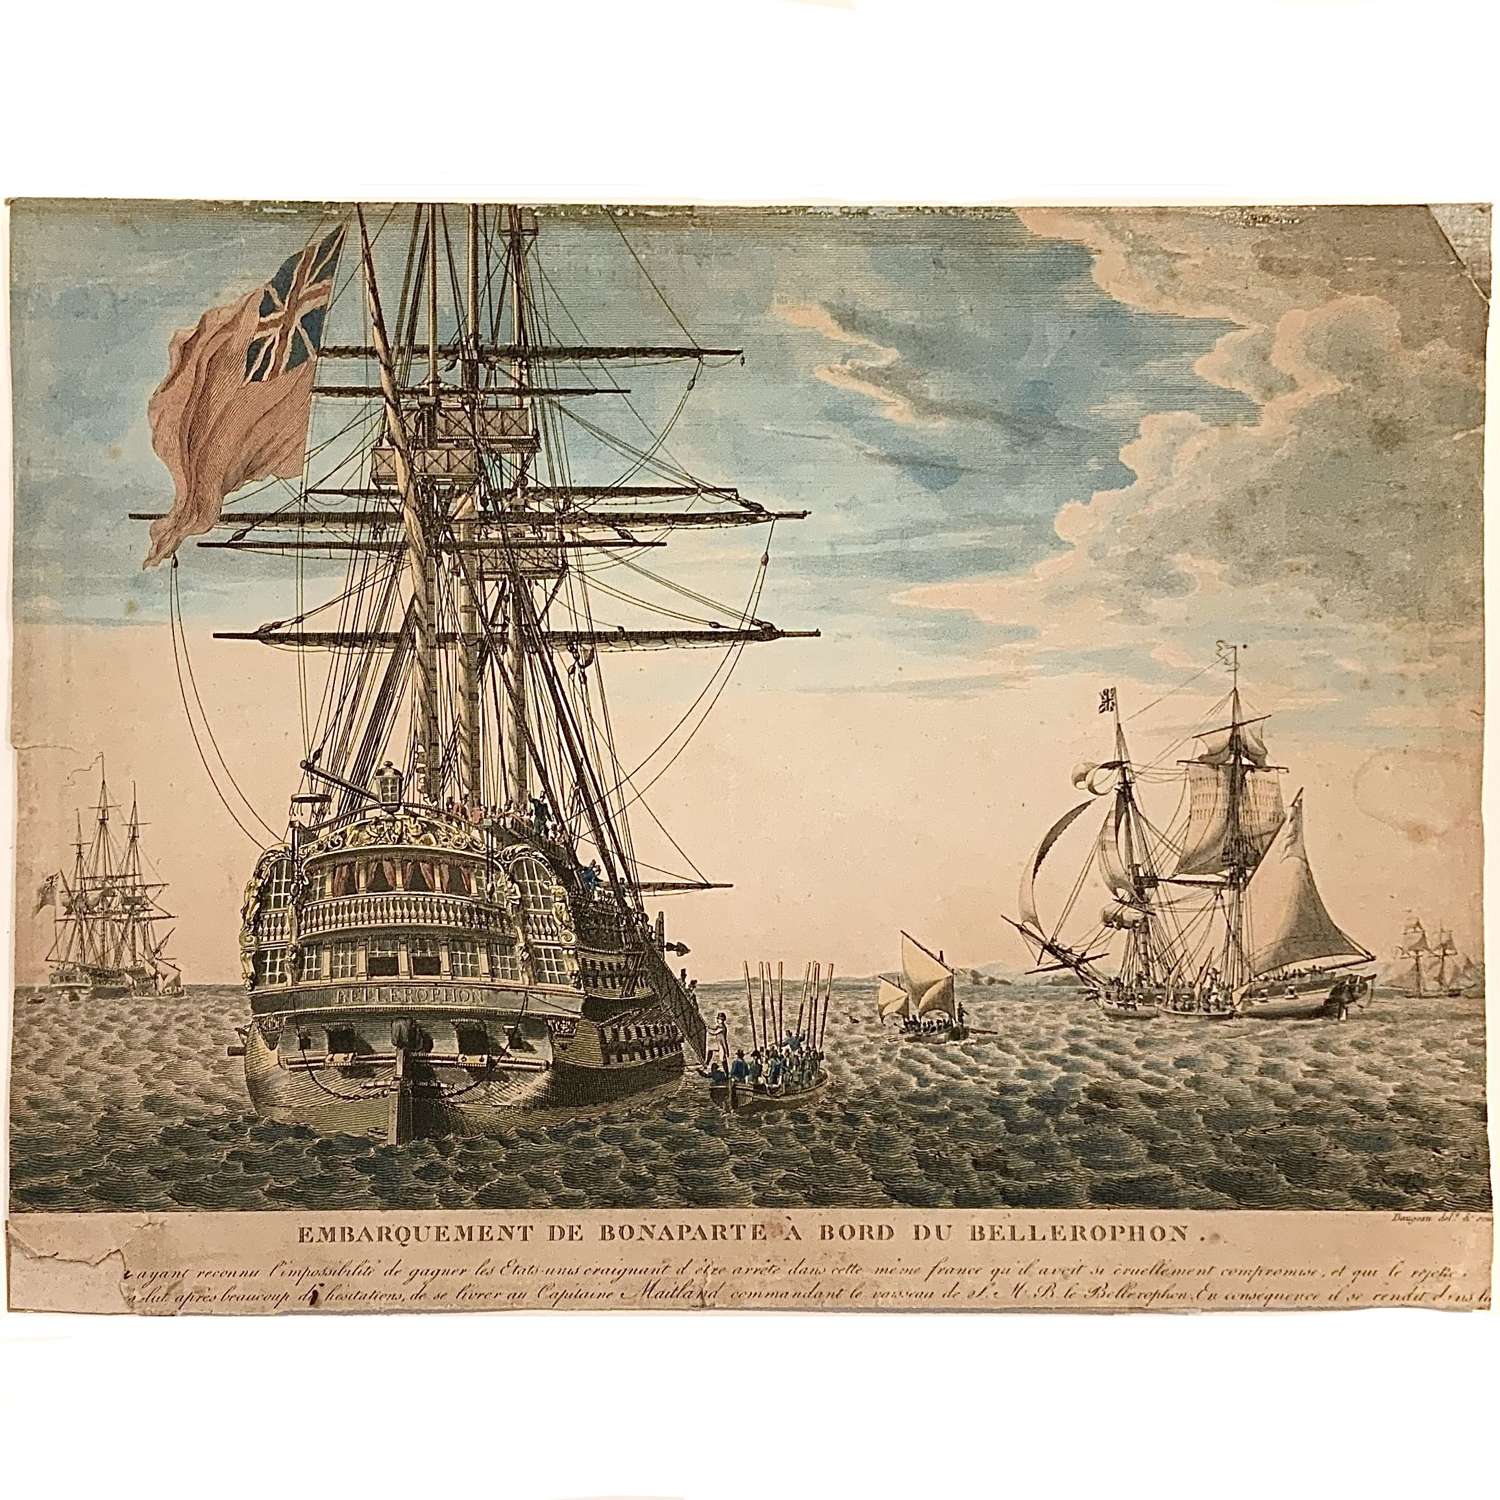 “Embarquement de Bonaparte À Bord du Bellerophon” 1815